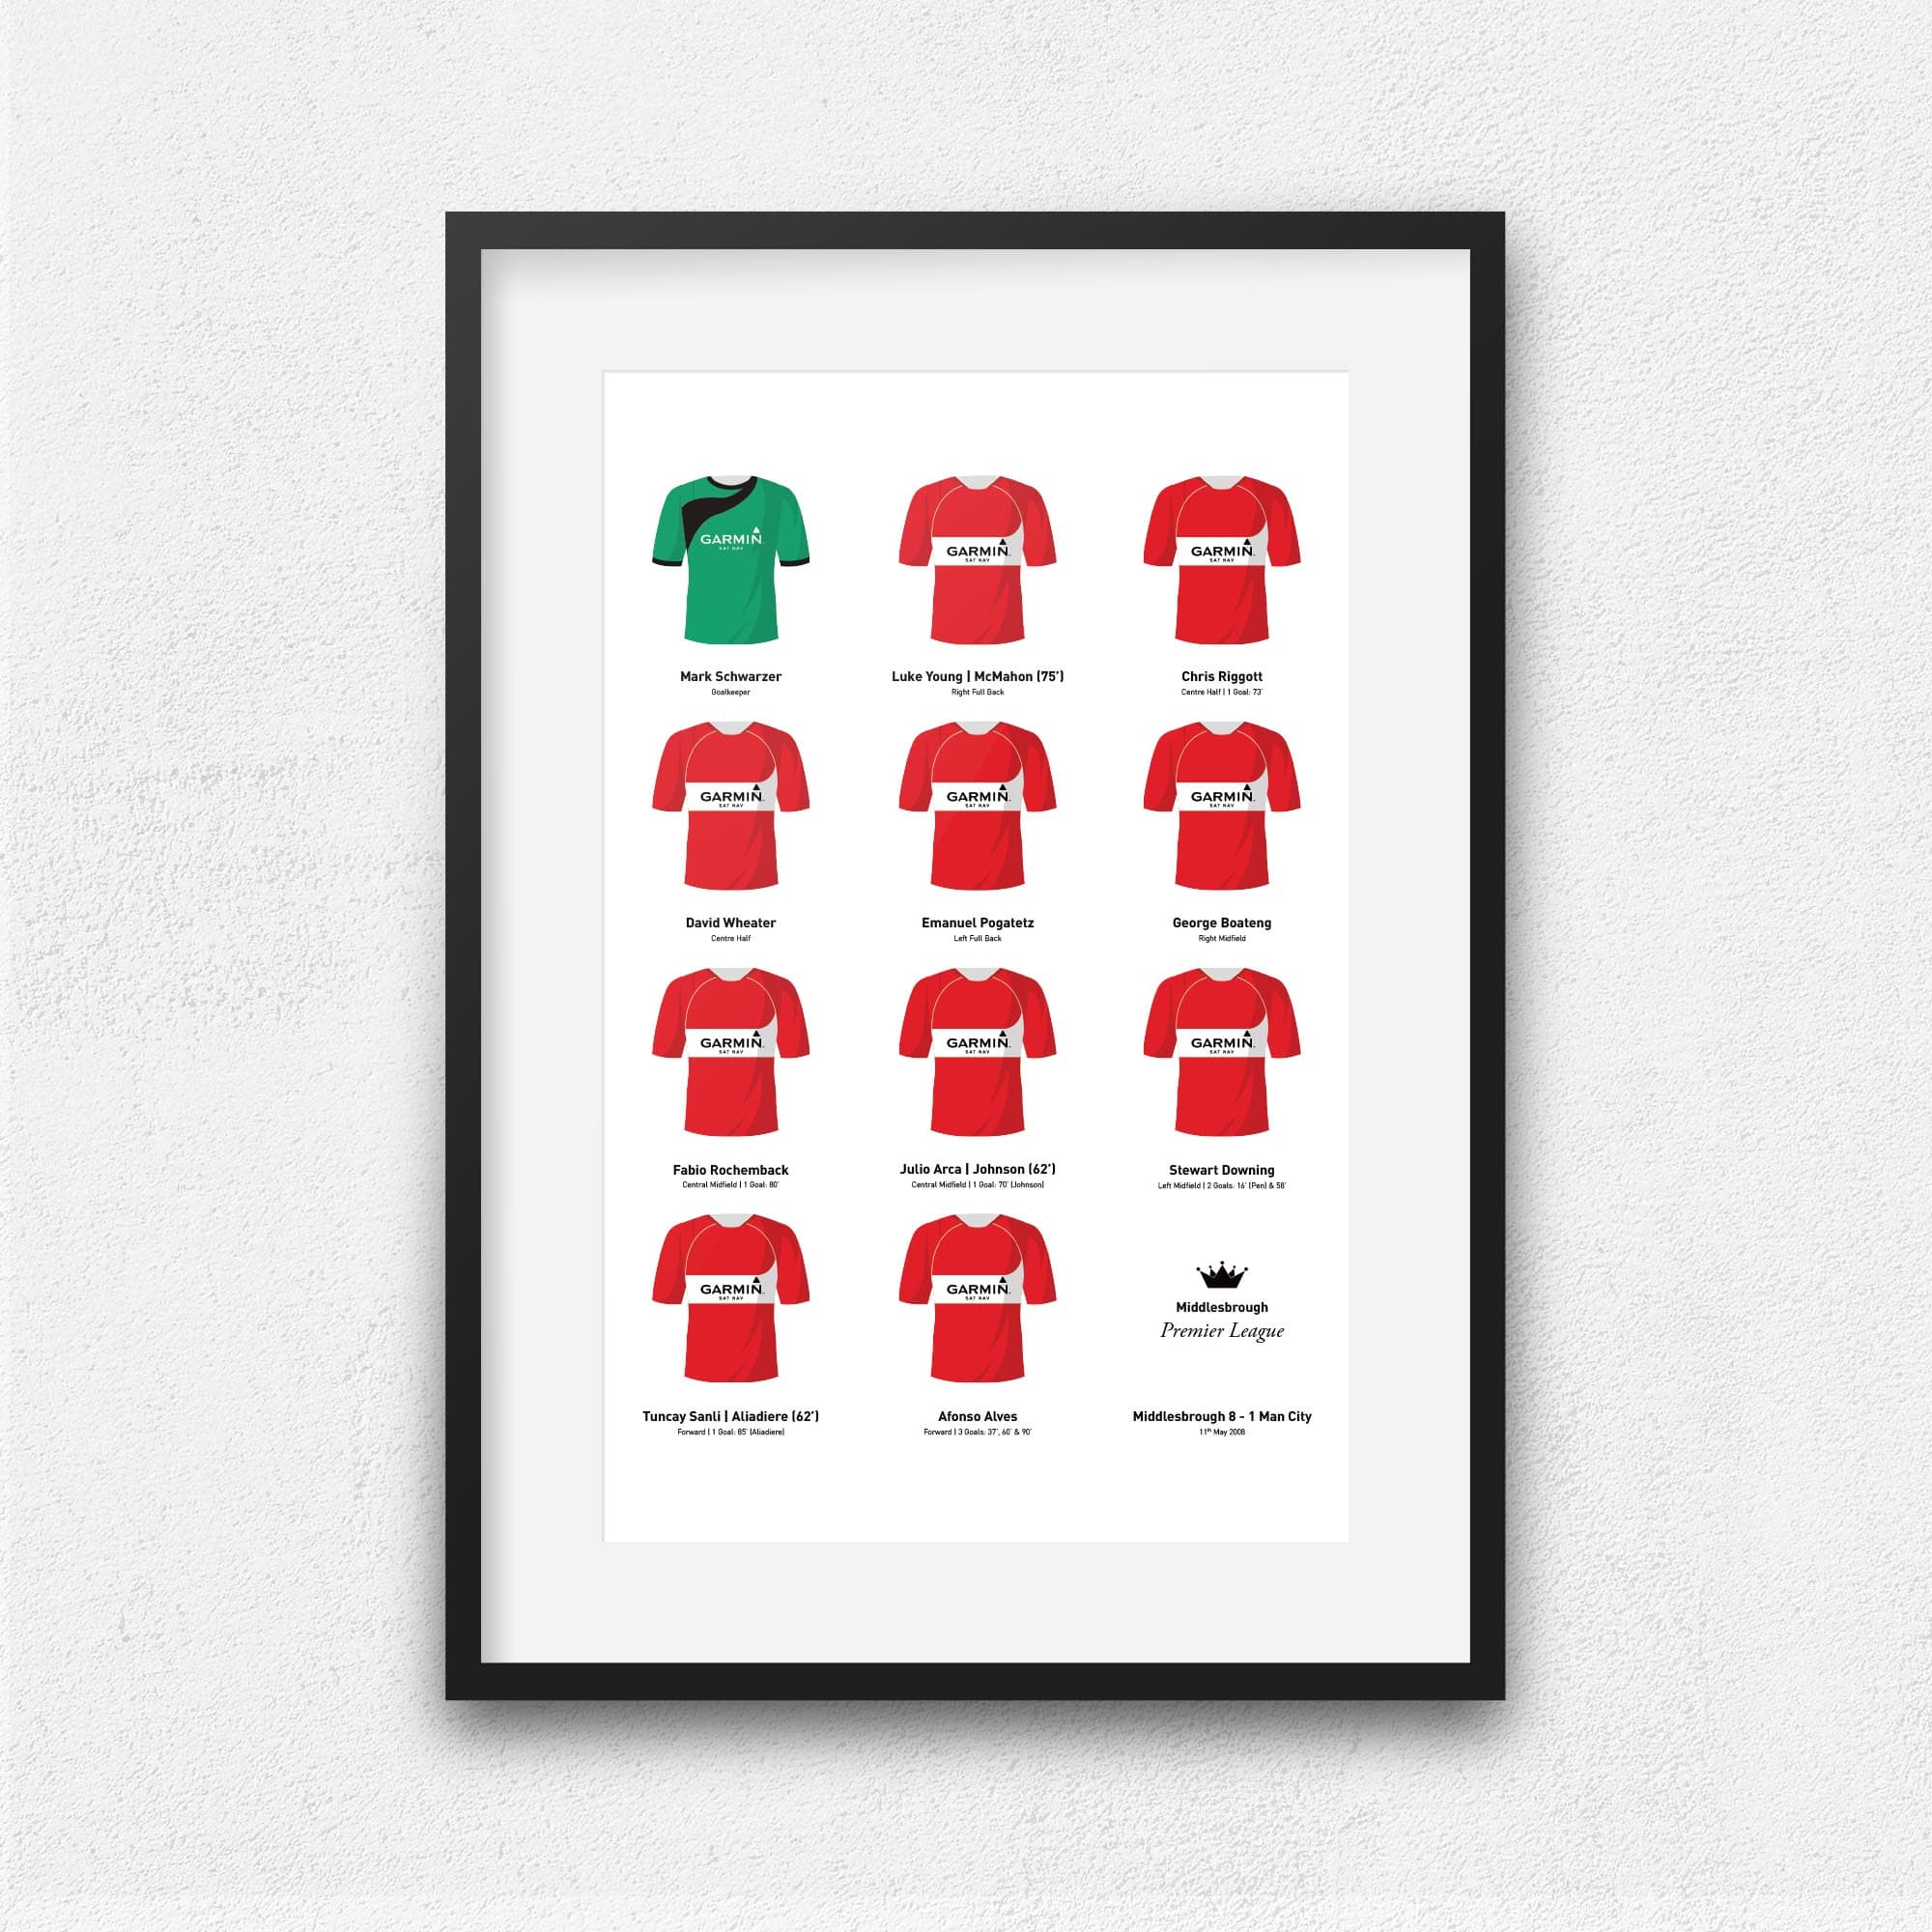 Middlesbrough 8-1 City Football Team Print Good Team On Paper